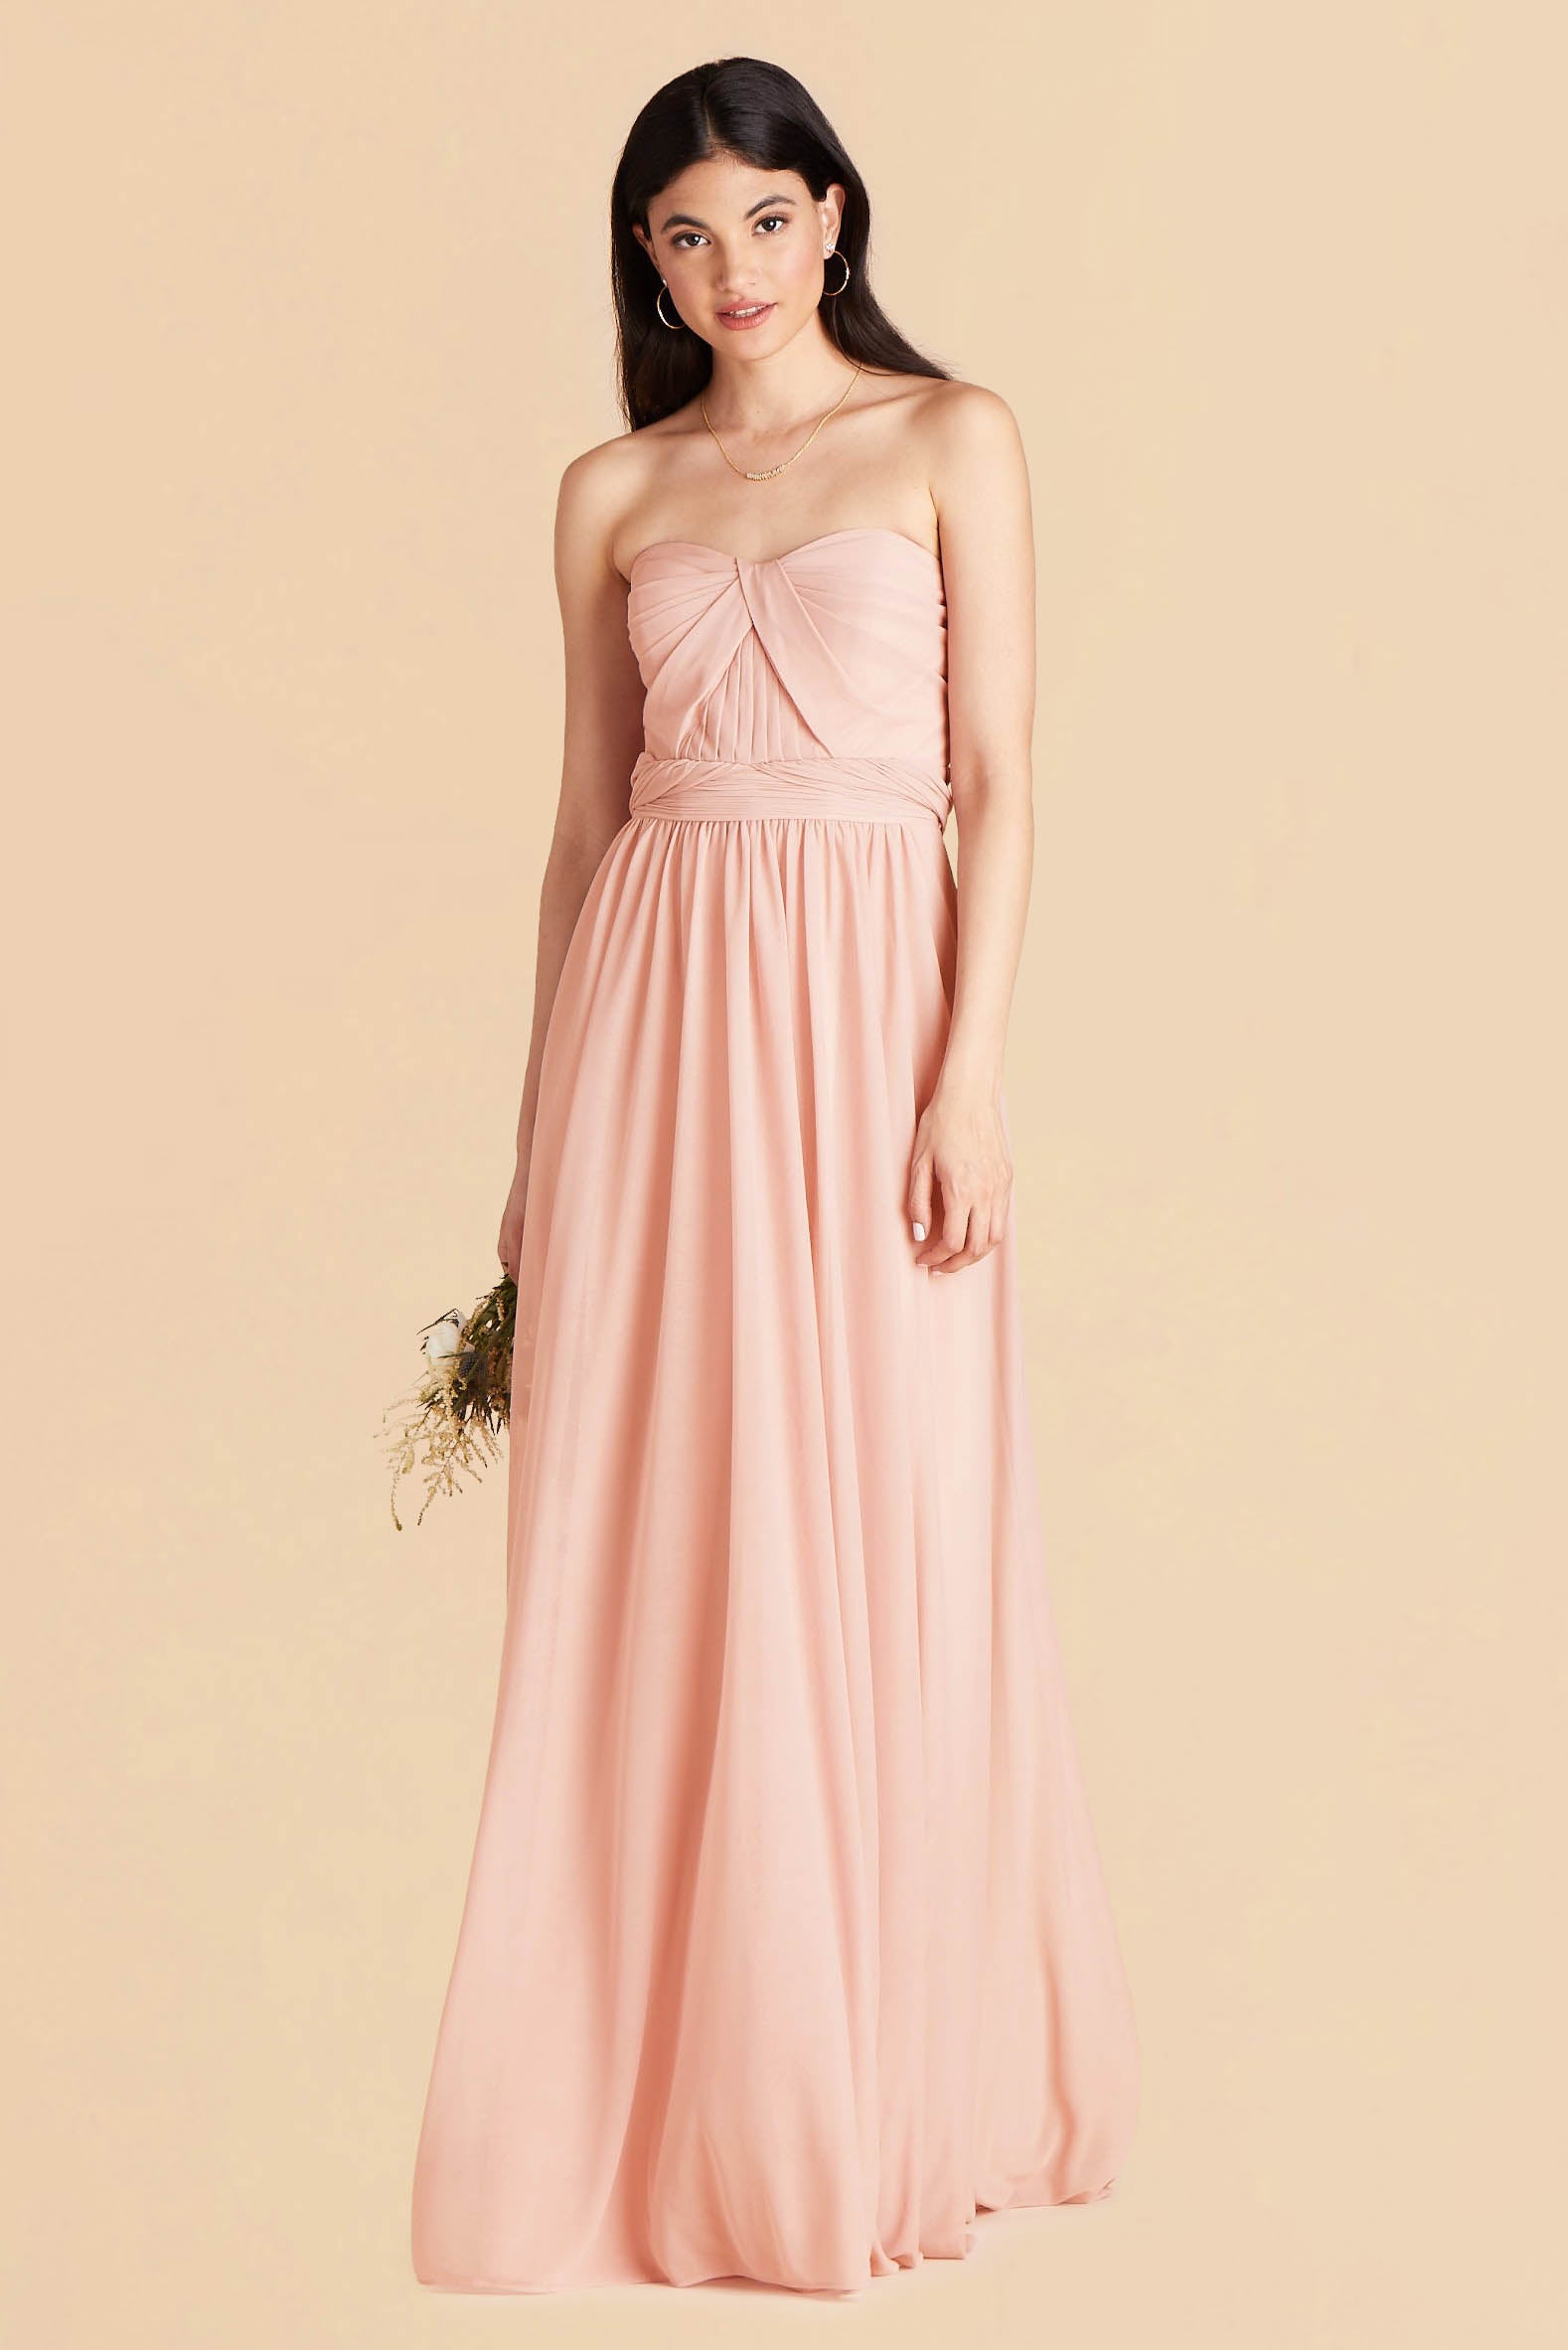 Grace convertible bridesmaid dress in Blush Pink Chiffon by Birdy Grey